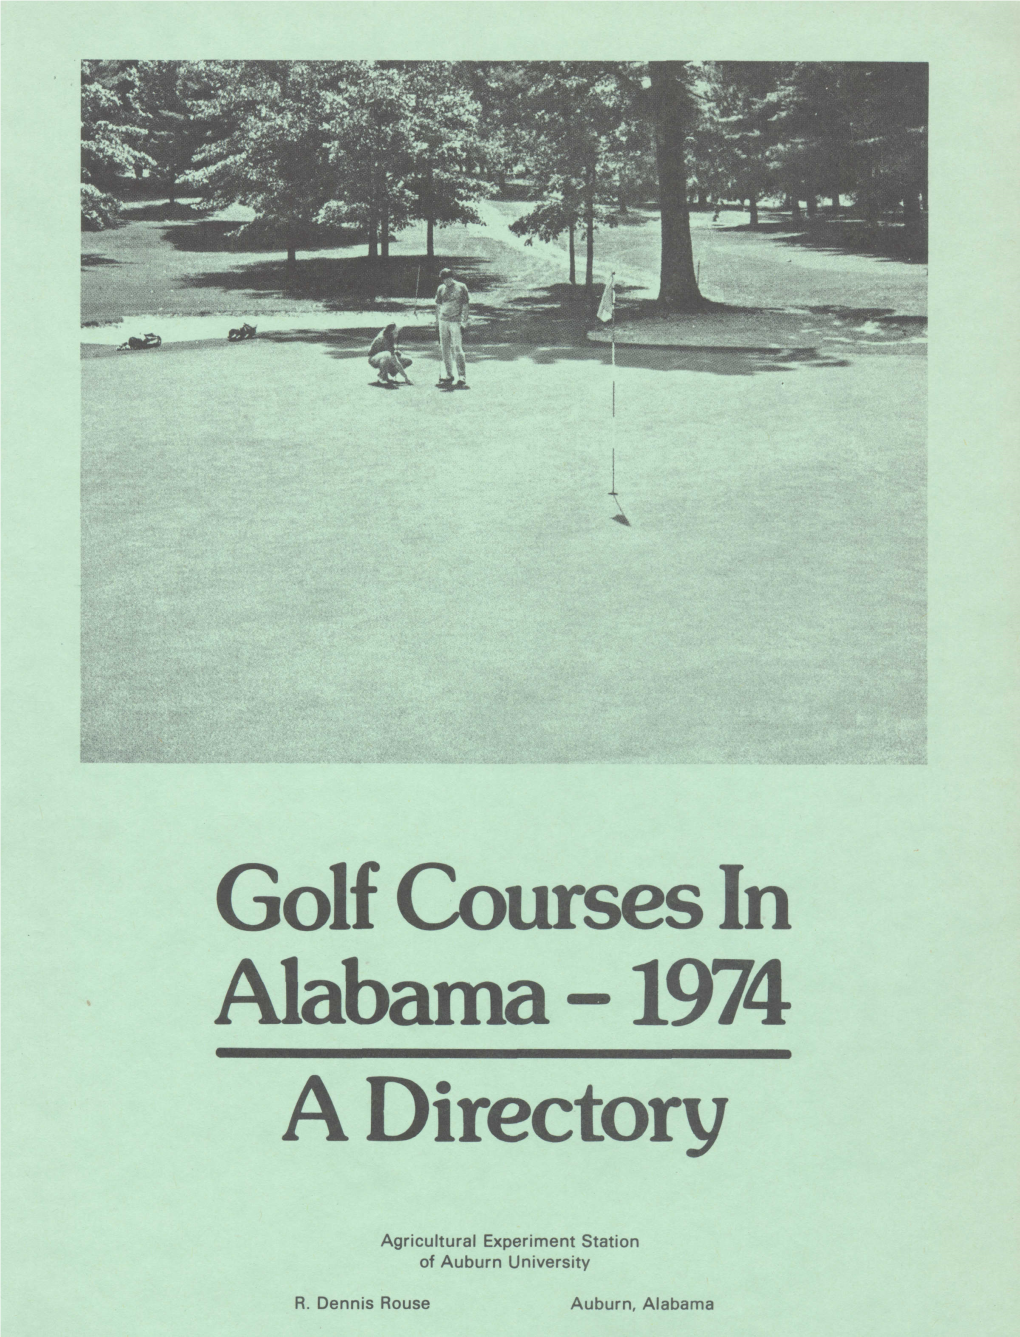 Alabama 1974 a Directory